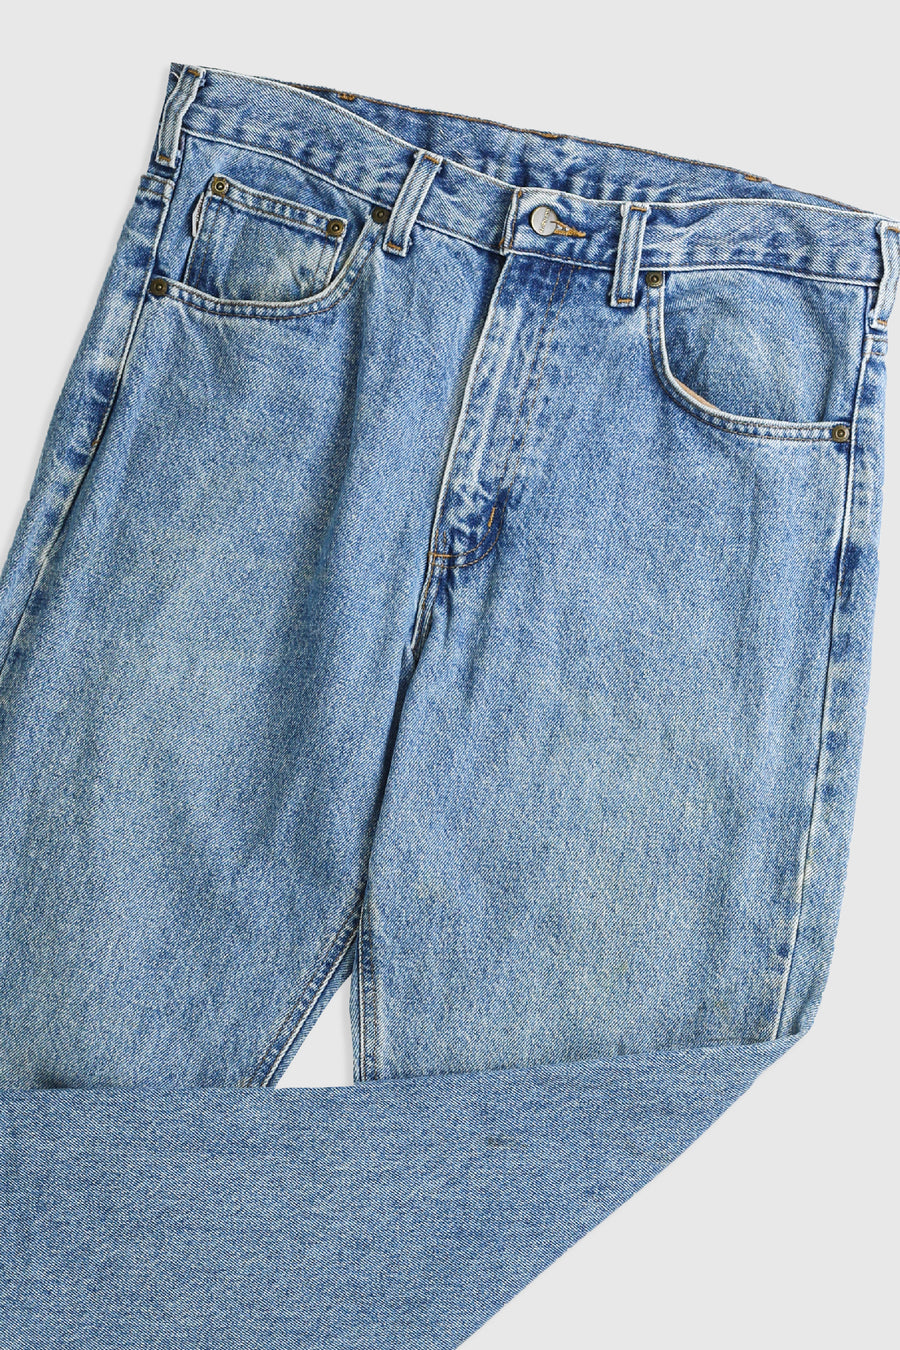 Vintage Carhartt Denim Work Pants - W34